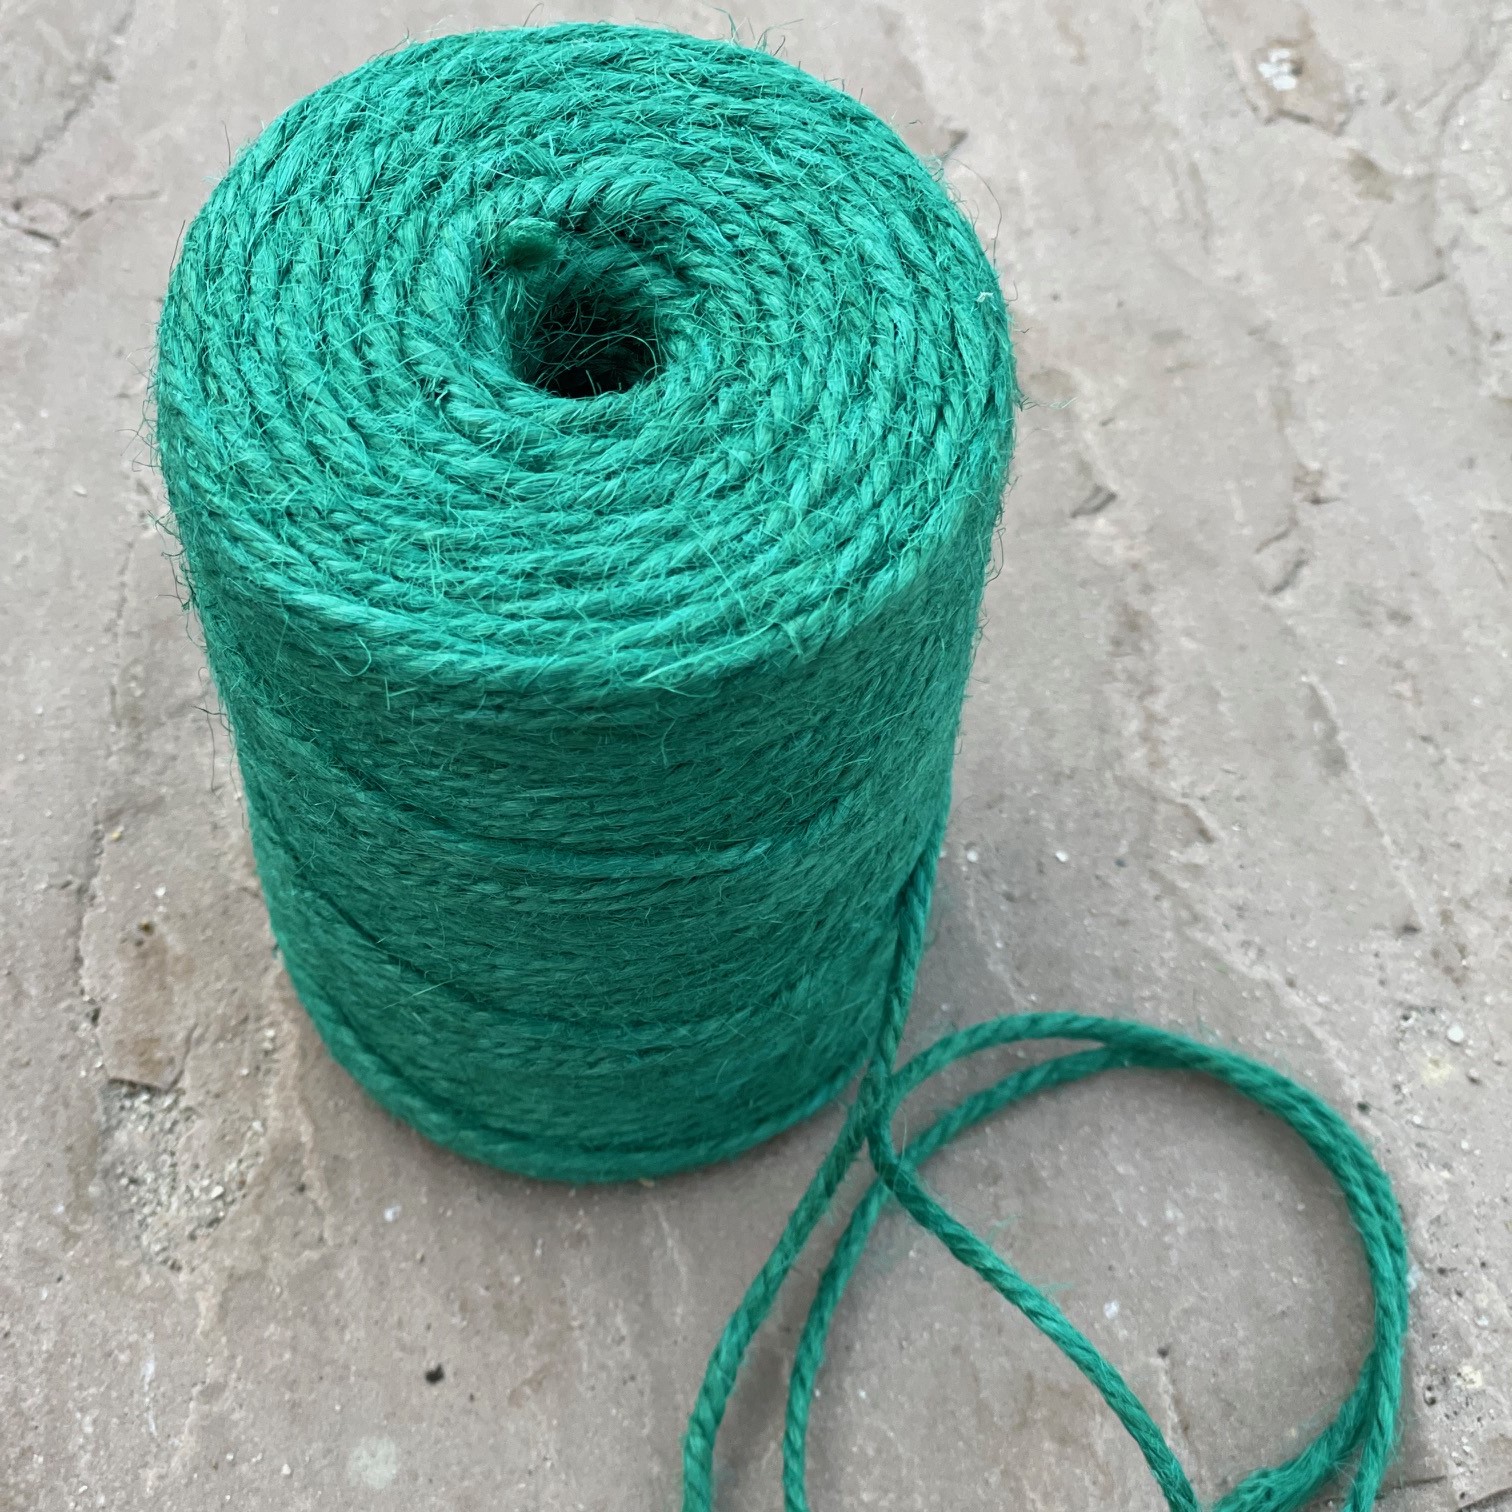 Opbindingssnor i grøn – Jutesnor – Flot rustik kvalitet. Rulle med ca. 100 meter / 200 Gram